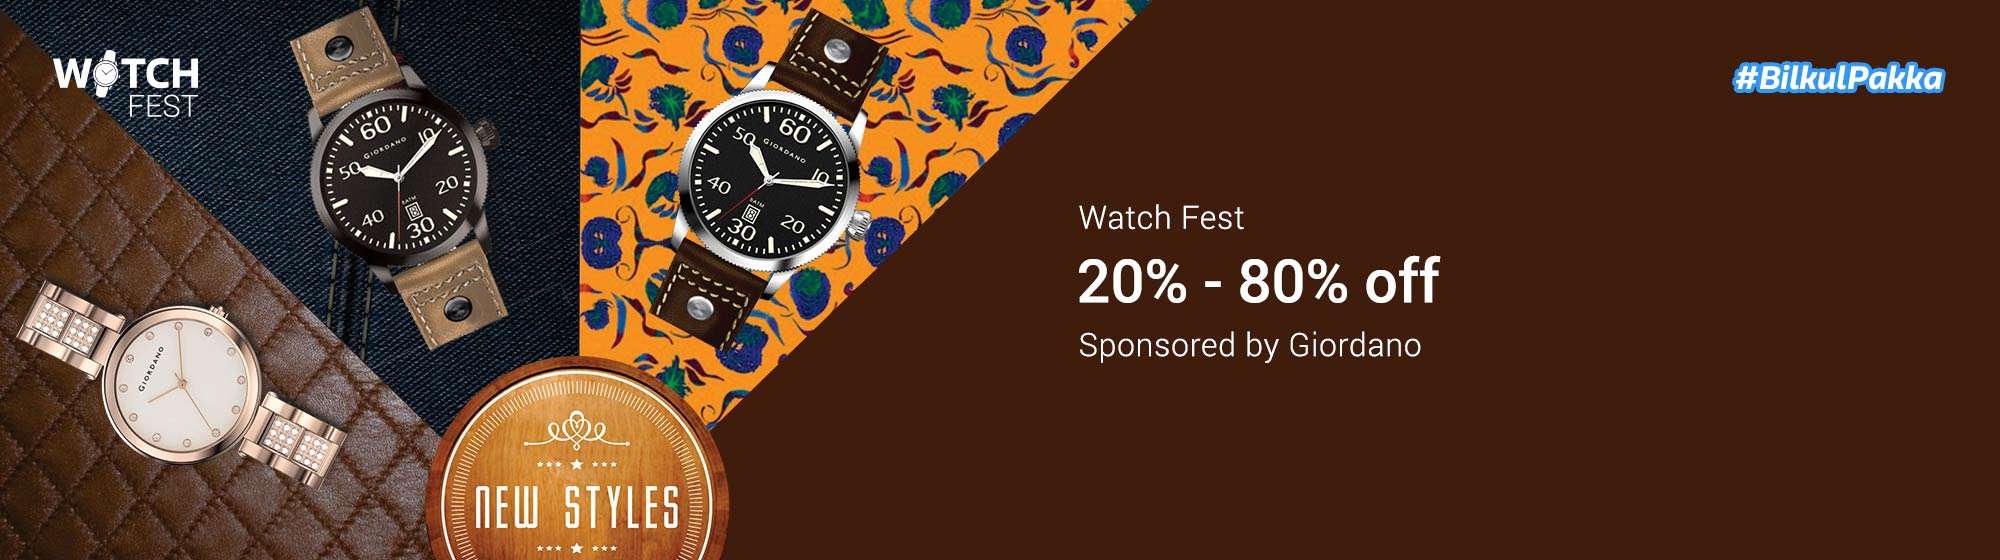 Rajesh Watch in Kalyan West,Mumbai - Best Casio-Wrist Watch Dealers in  Mumbai - Justdial